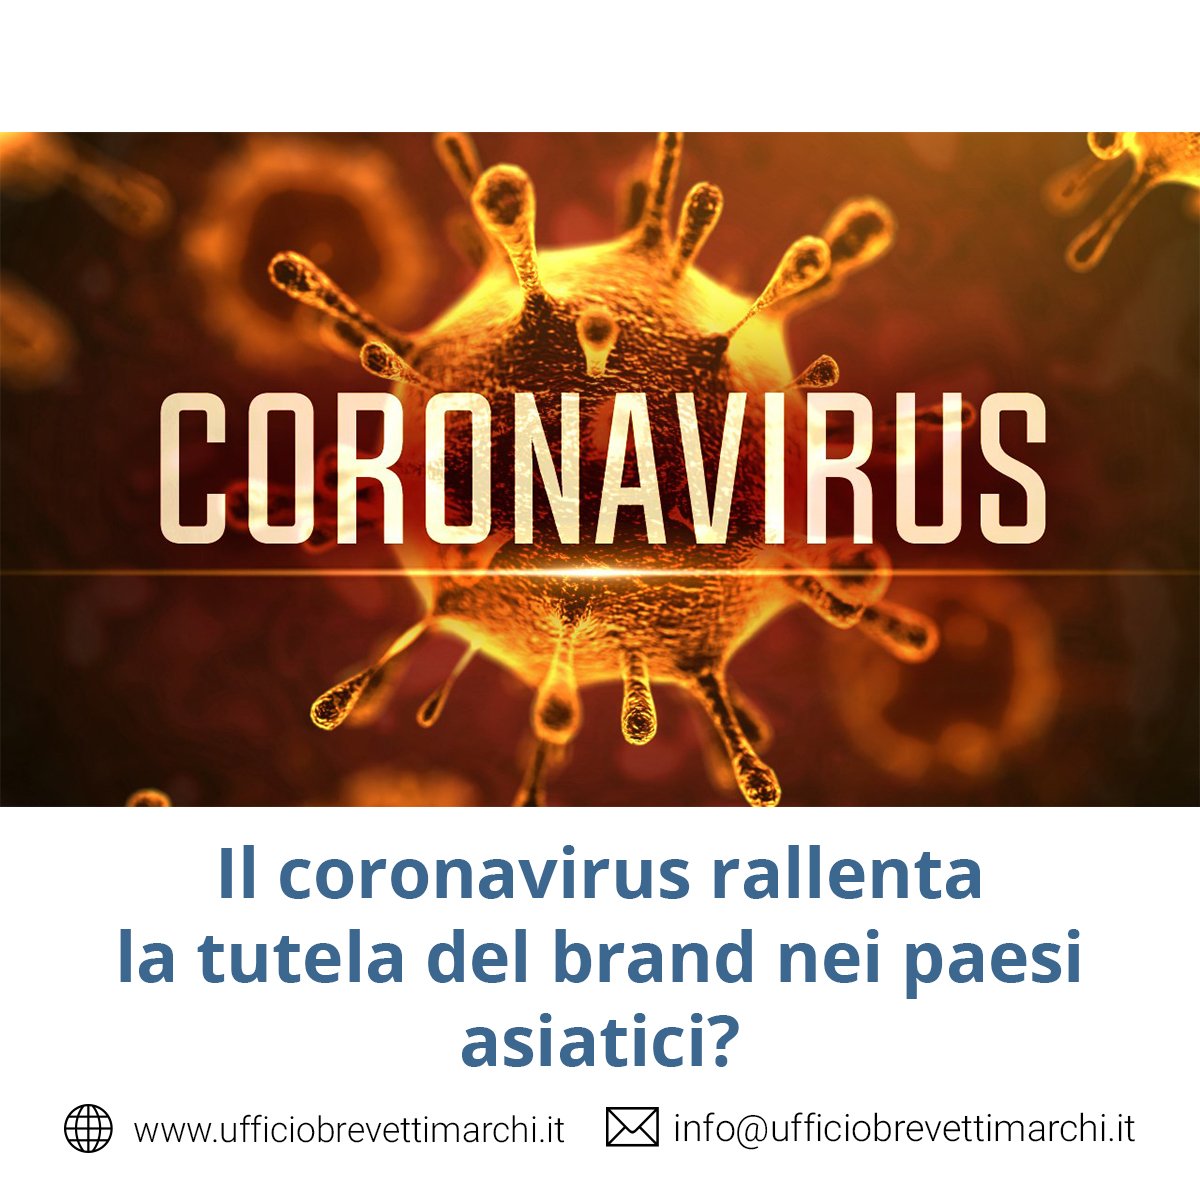 Il coronavirus rallenta la tutela del brand nei paesi asiatici?